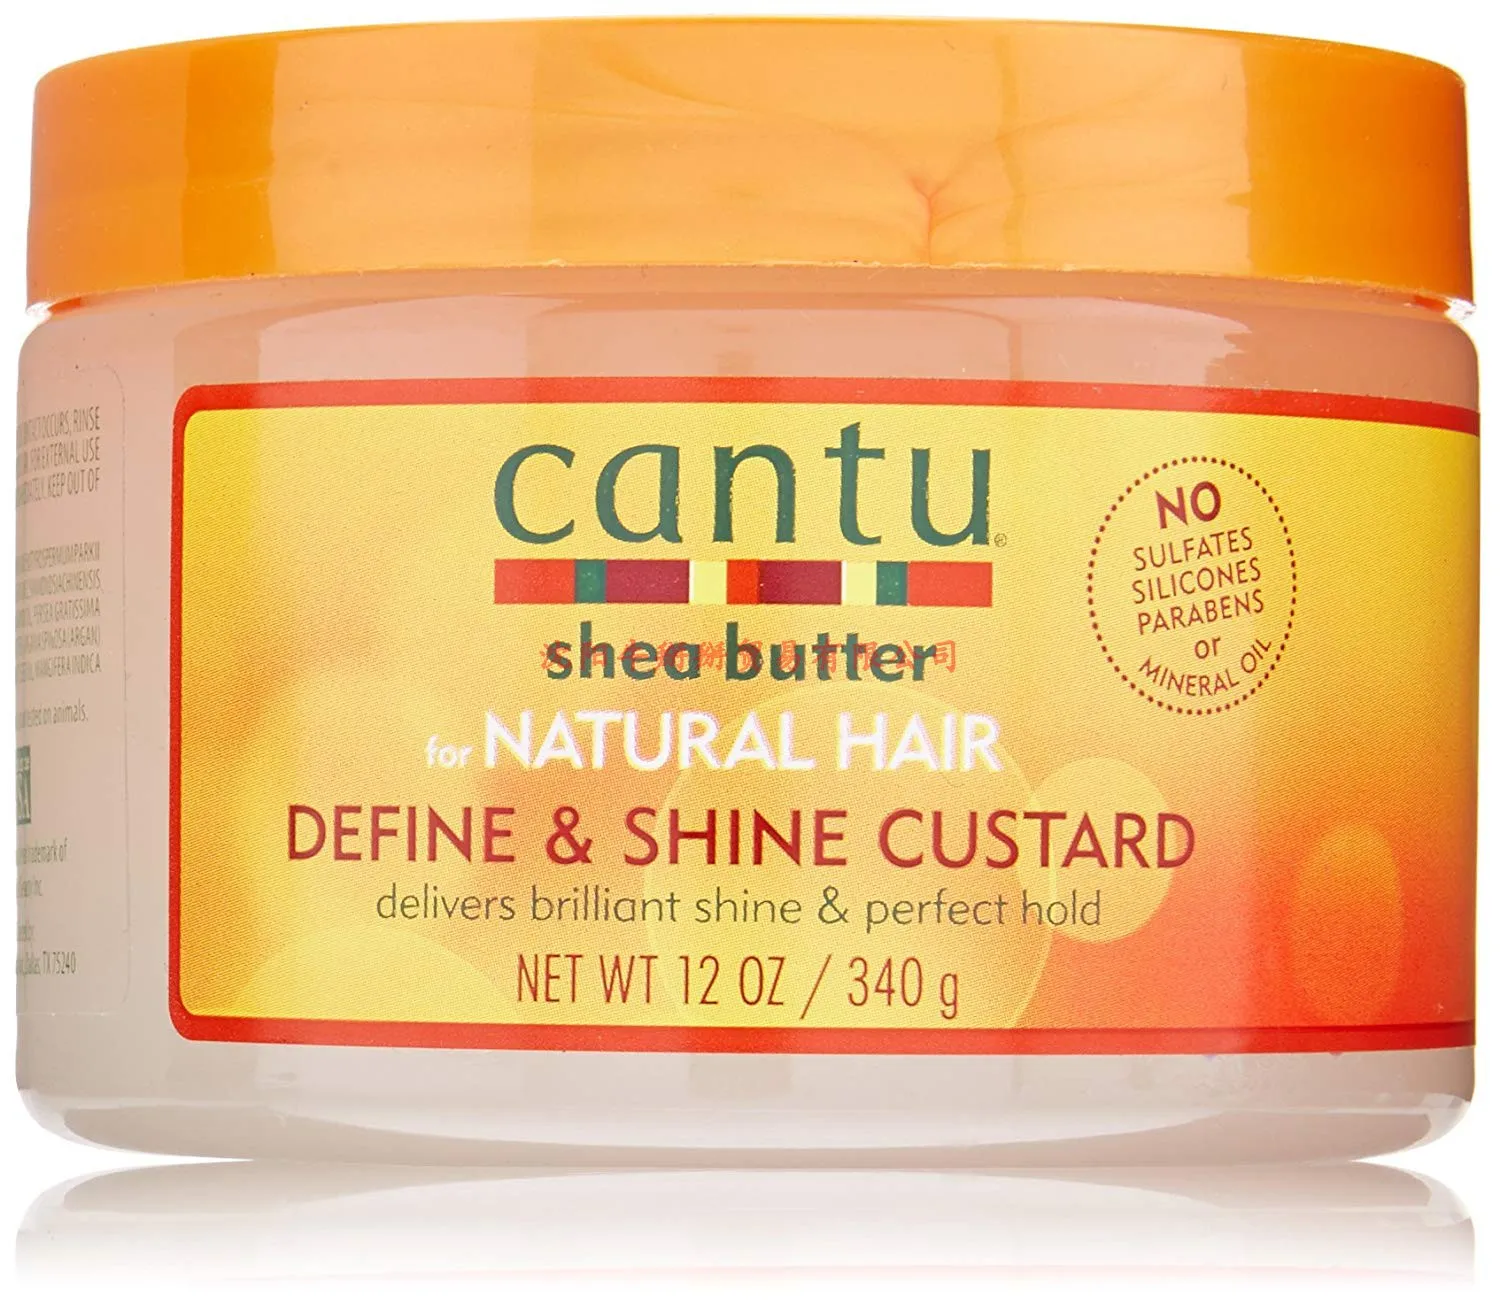 

Cantu Shea Butter Natural Hair Define and Shine Custard 340g